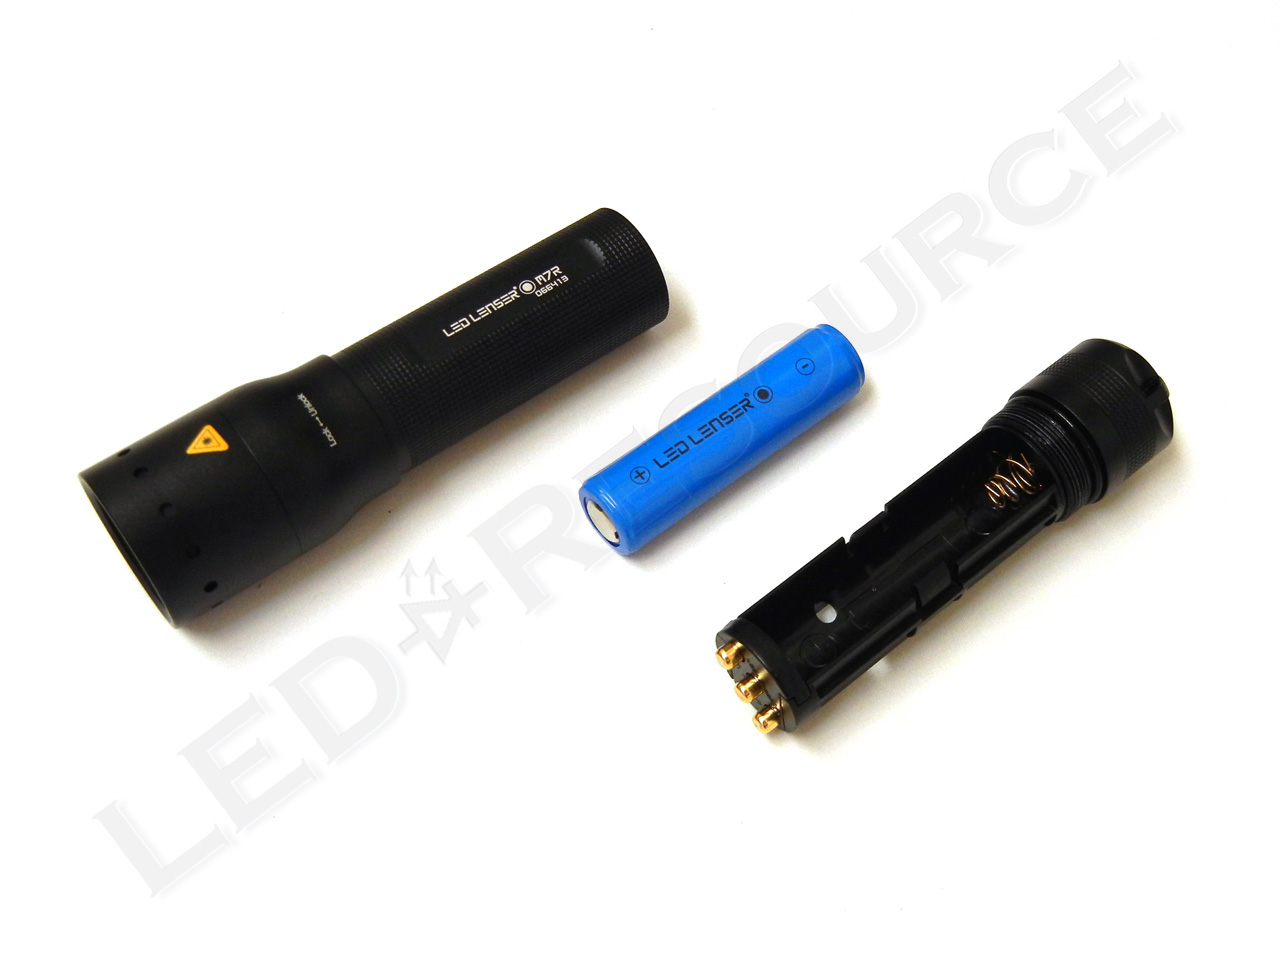 LED Lenser M7R USB Rechargeable Multi-function Torch Flashlight US 